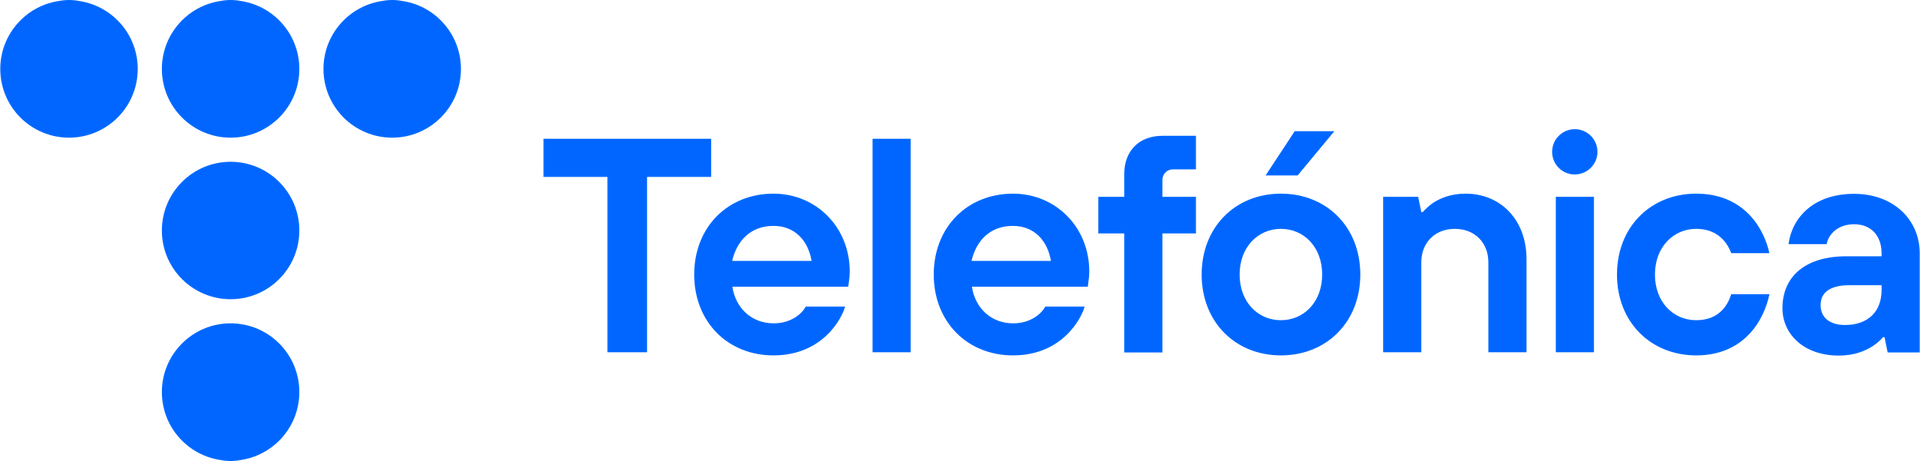 Telefonica logo empresa colaboradora con SecuriBath